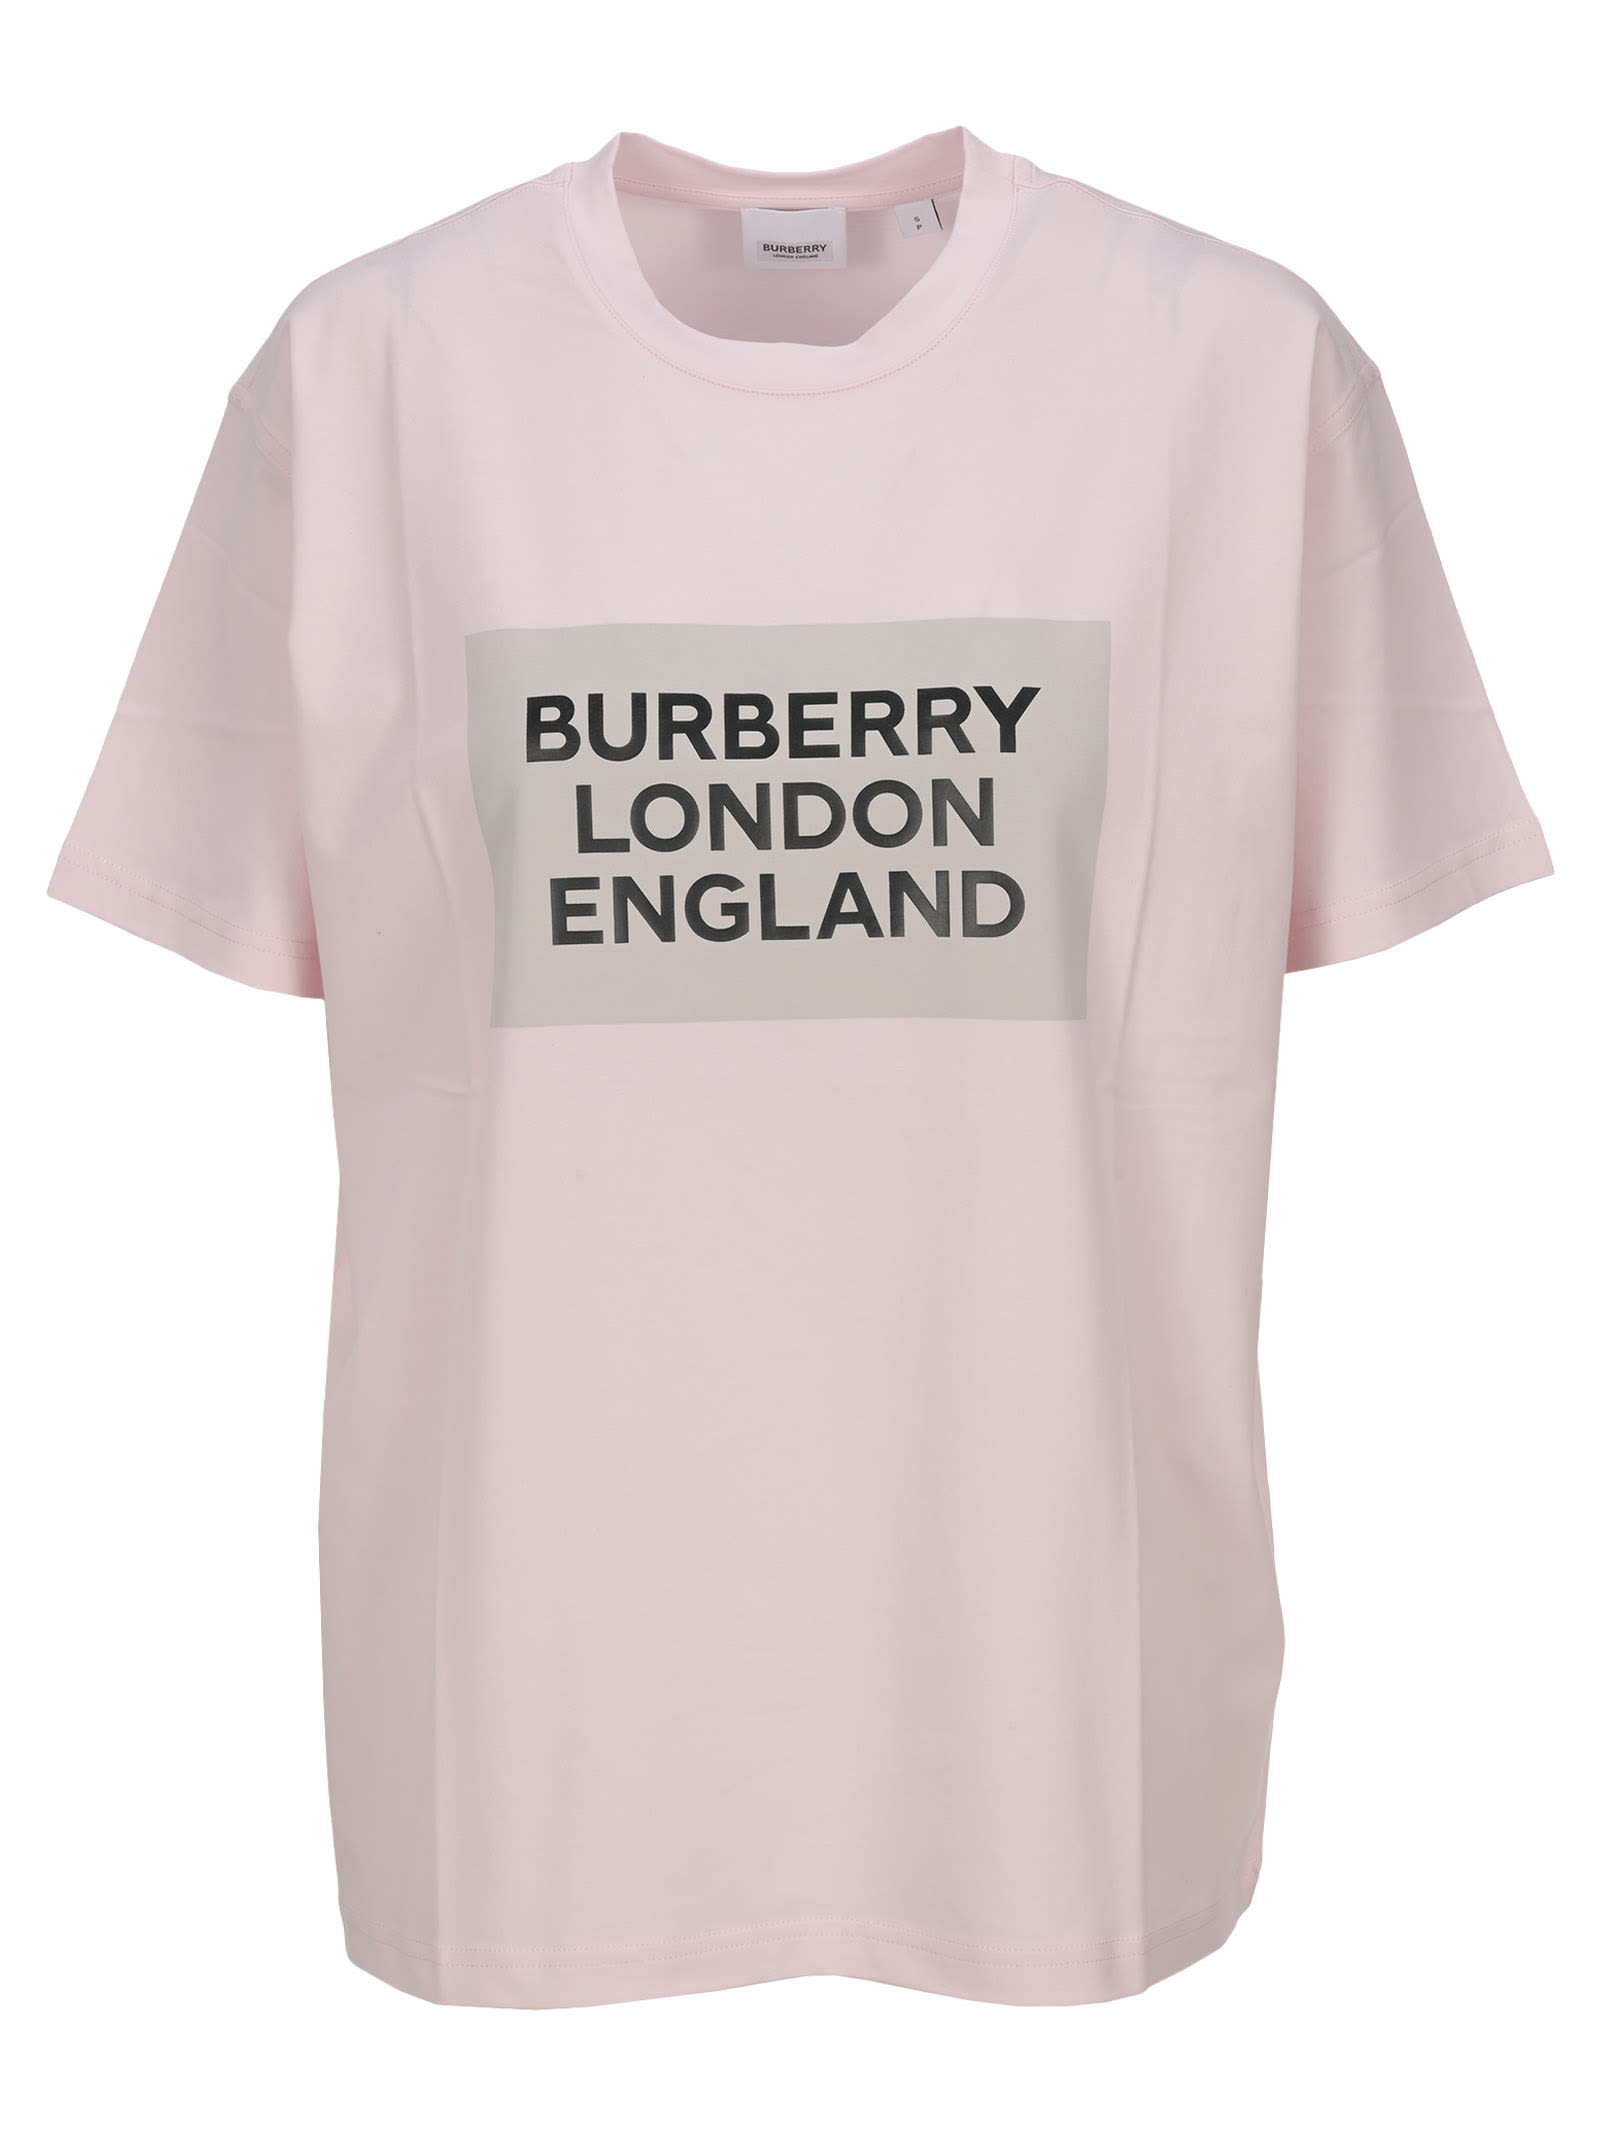 burberry london t shirt